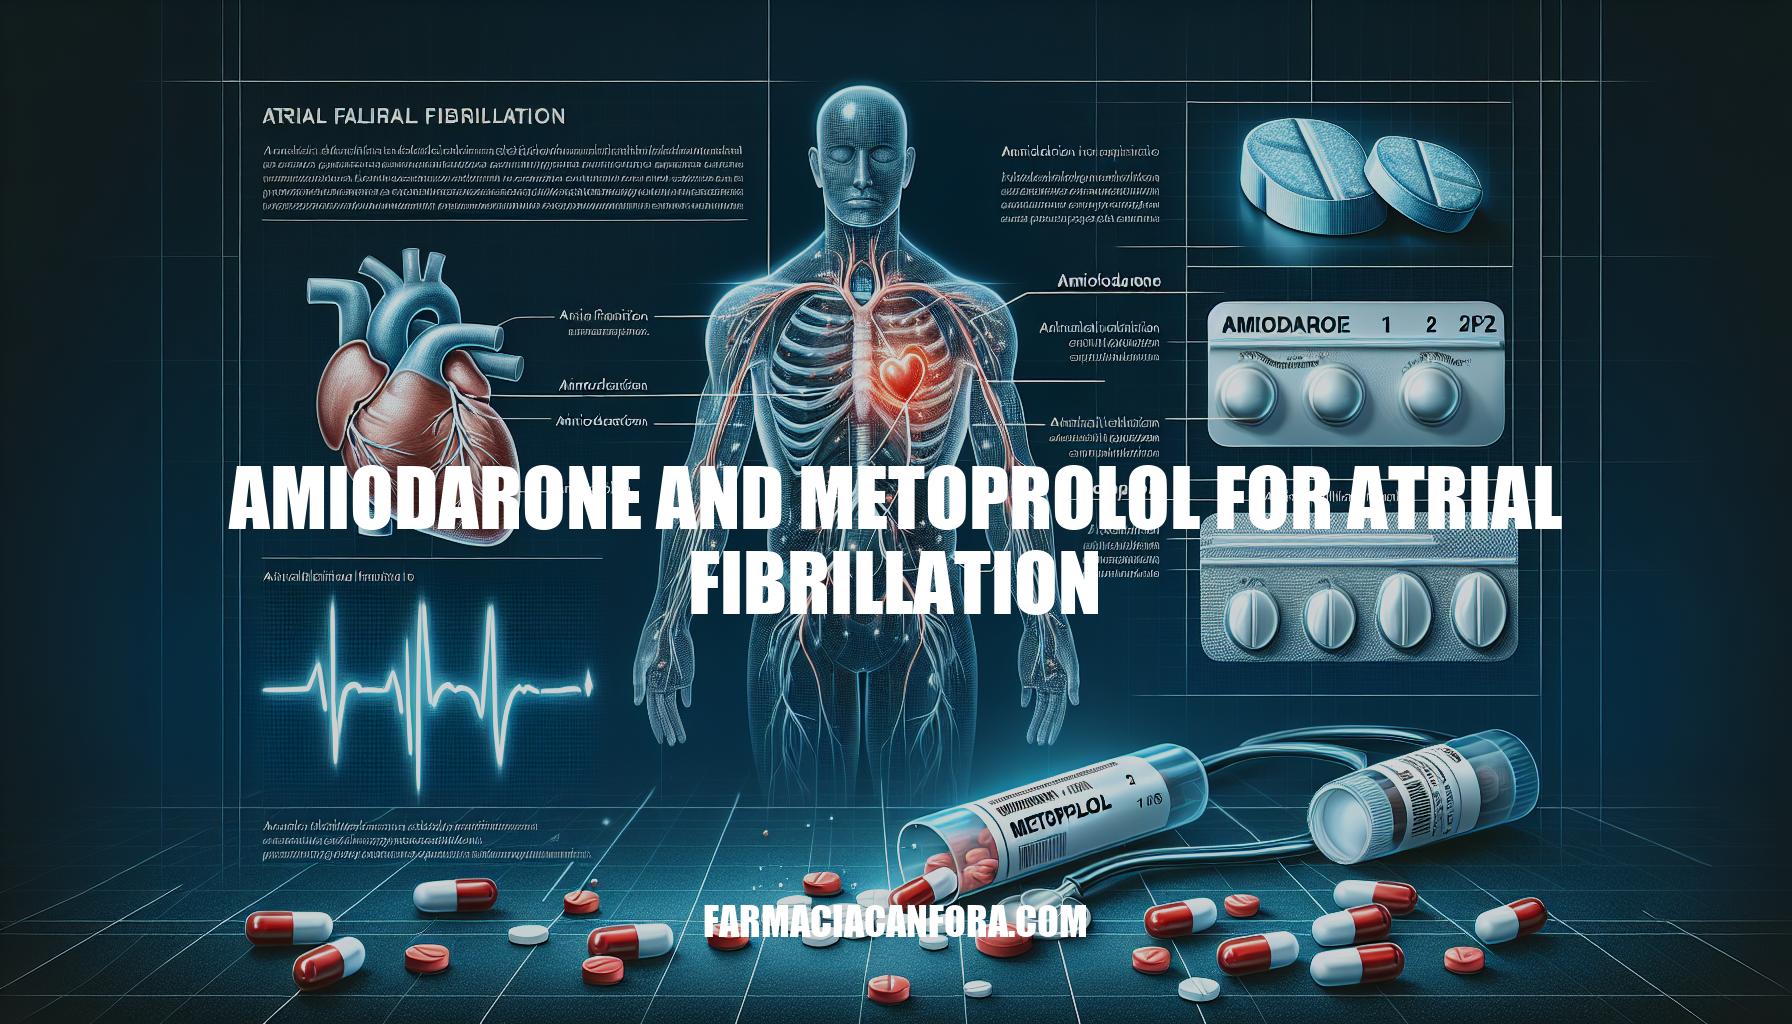 Amiodarone and Metoprolol for Atrial Fibrillation: Treatment Guide